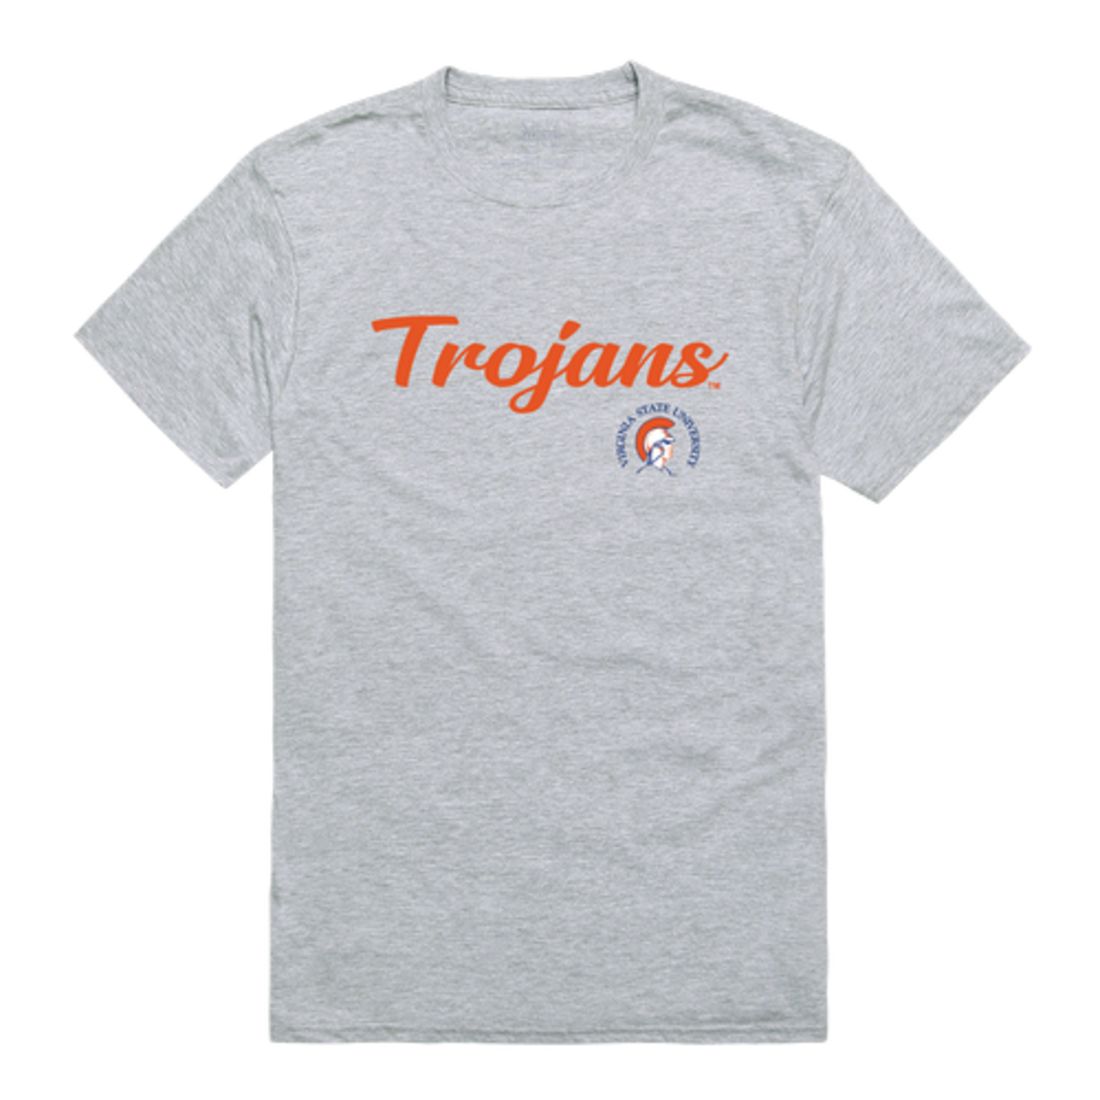 Virginia State University Trojans Script T-Shirt Tee